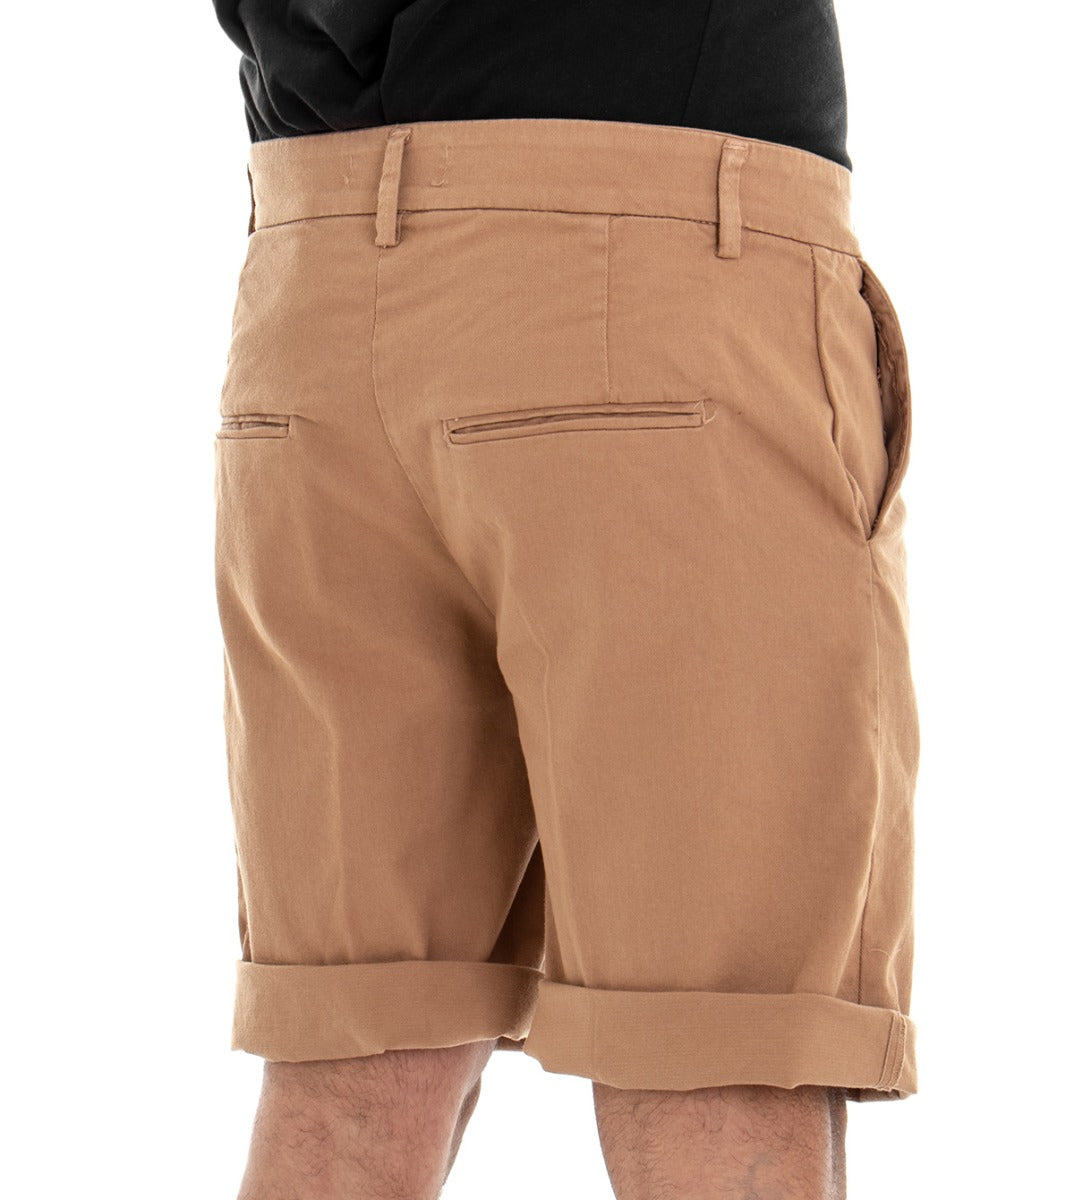 Bermuda Short Men's Shorts Camel Cotton America Pocket GIOSAL-PC1380A